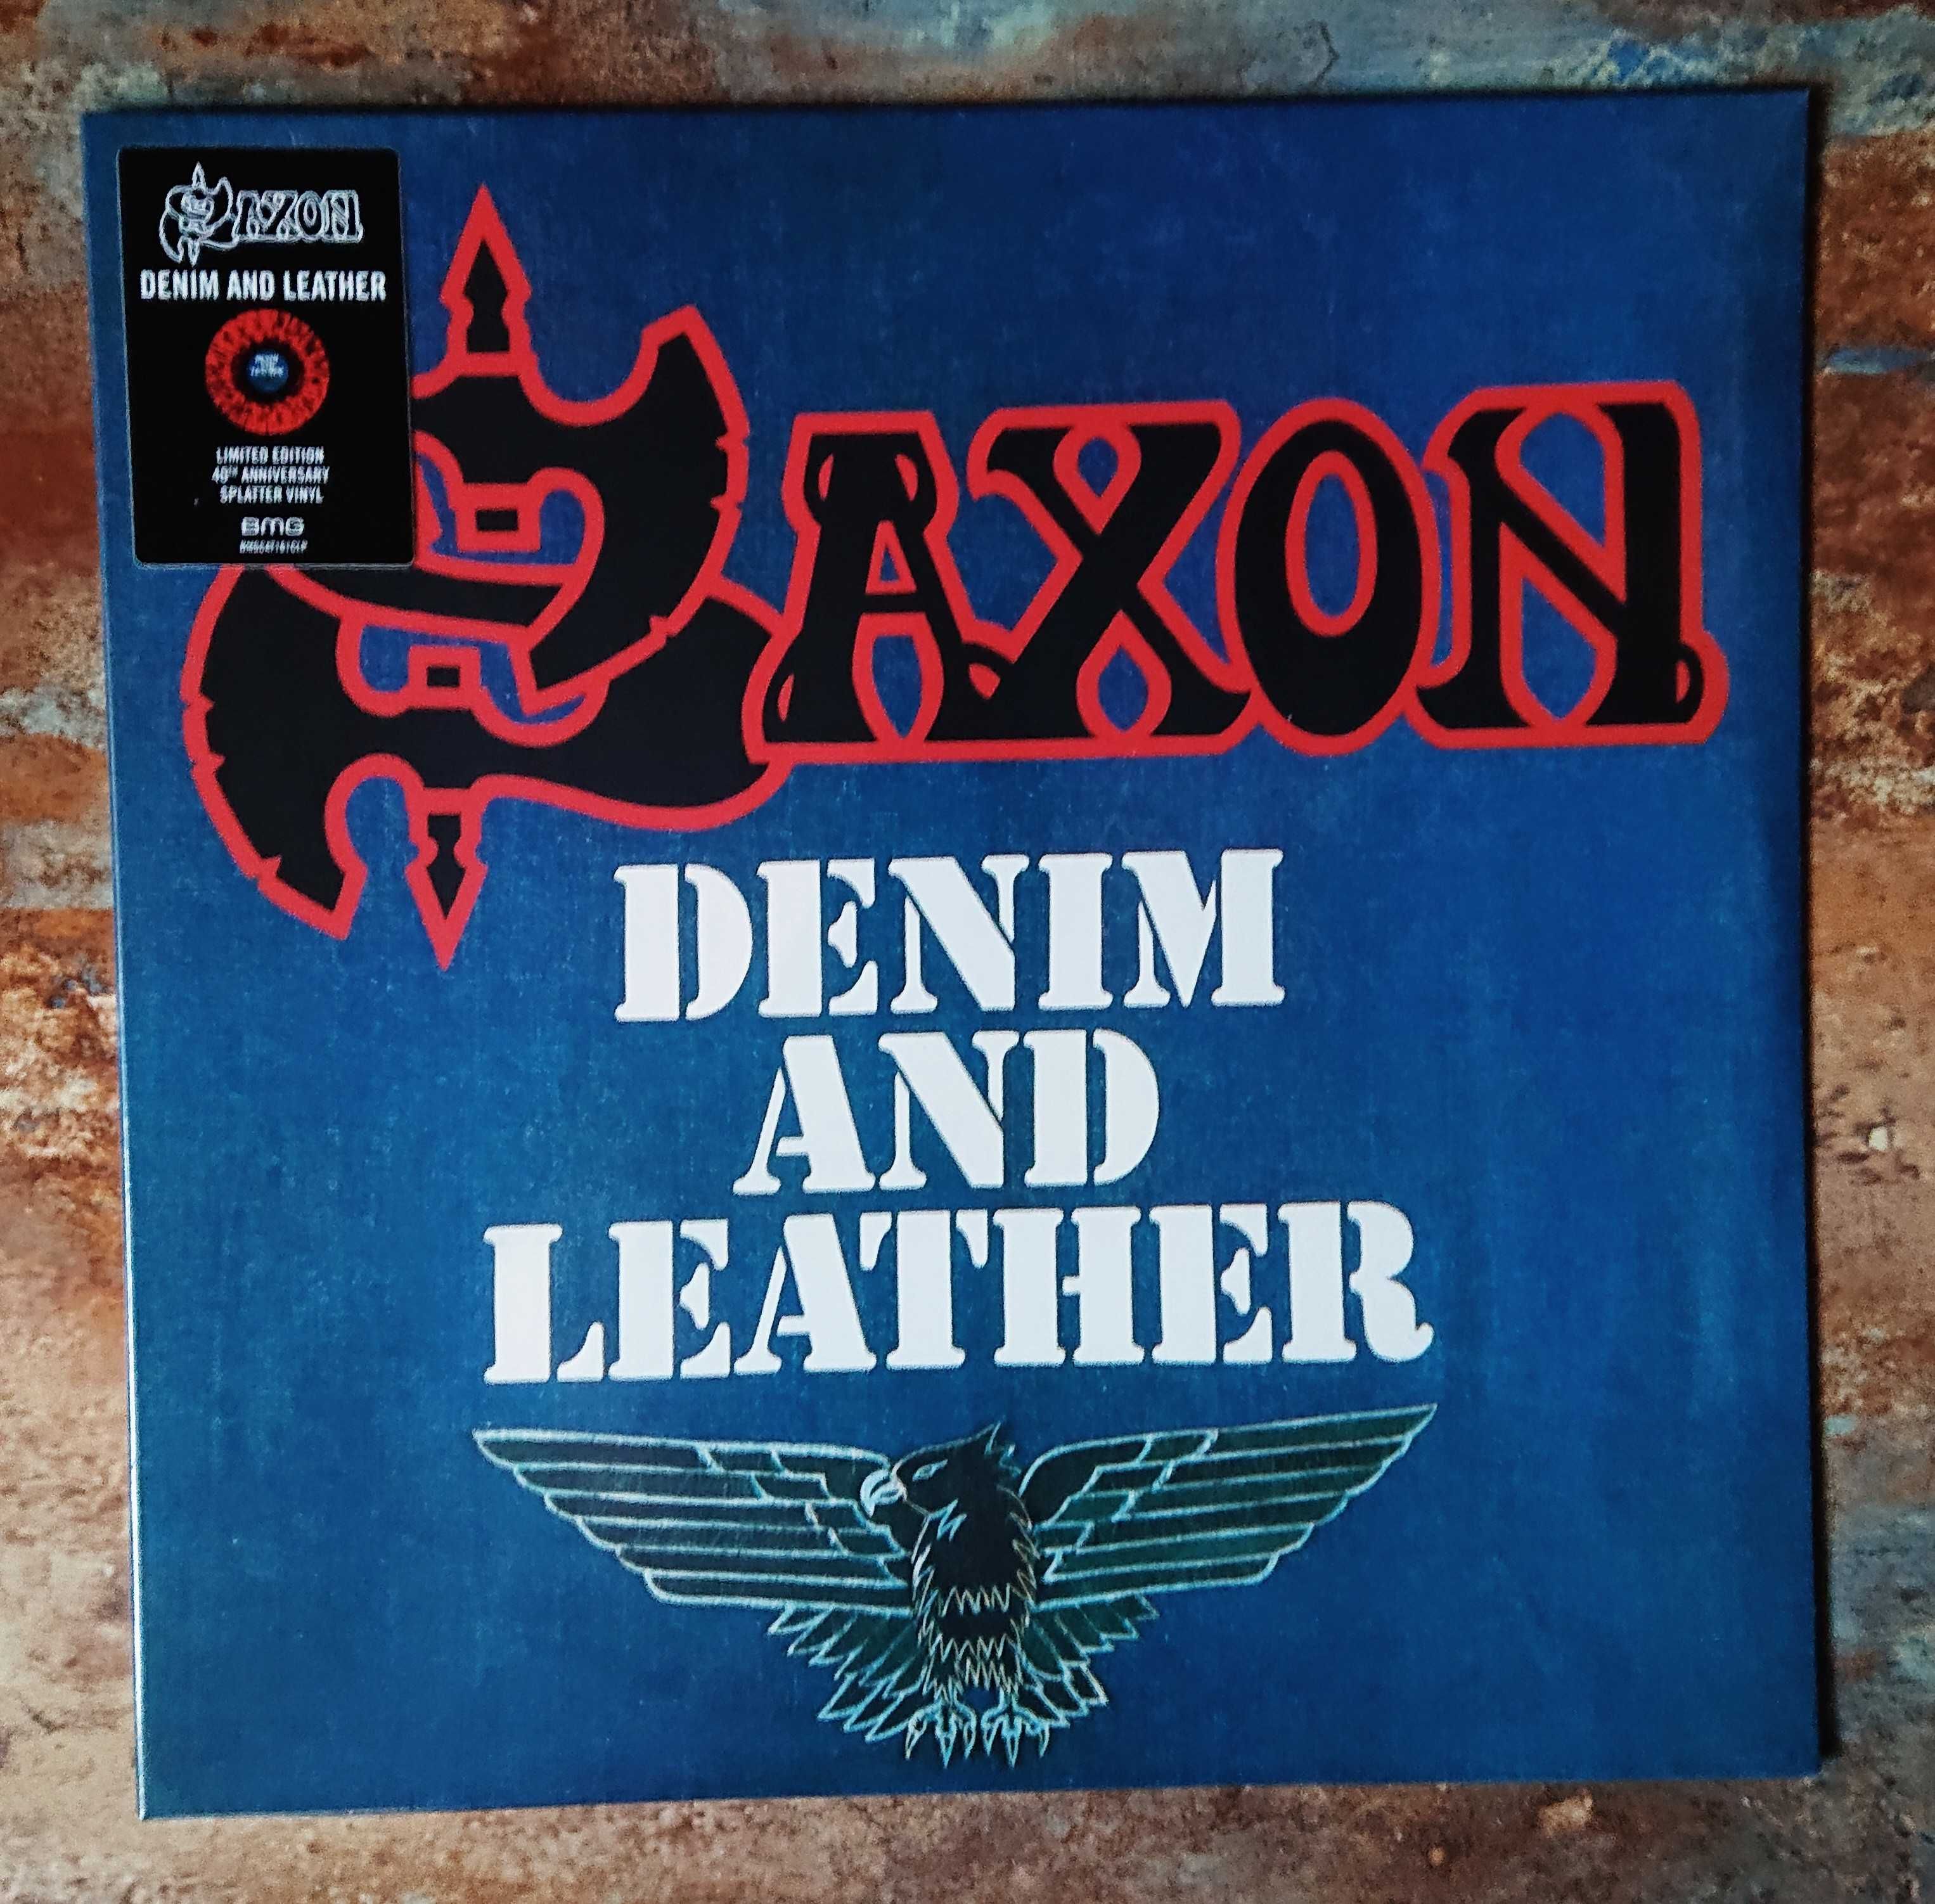 Saxon Iron Maiden - LP запаковані